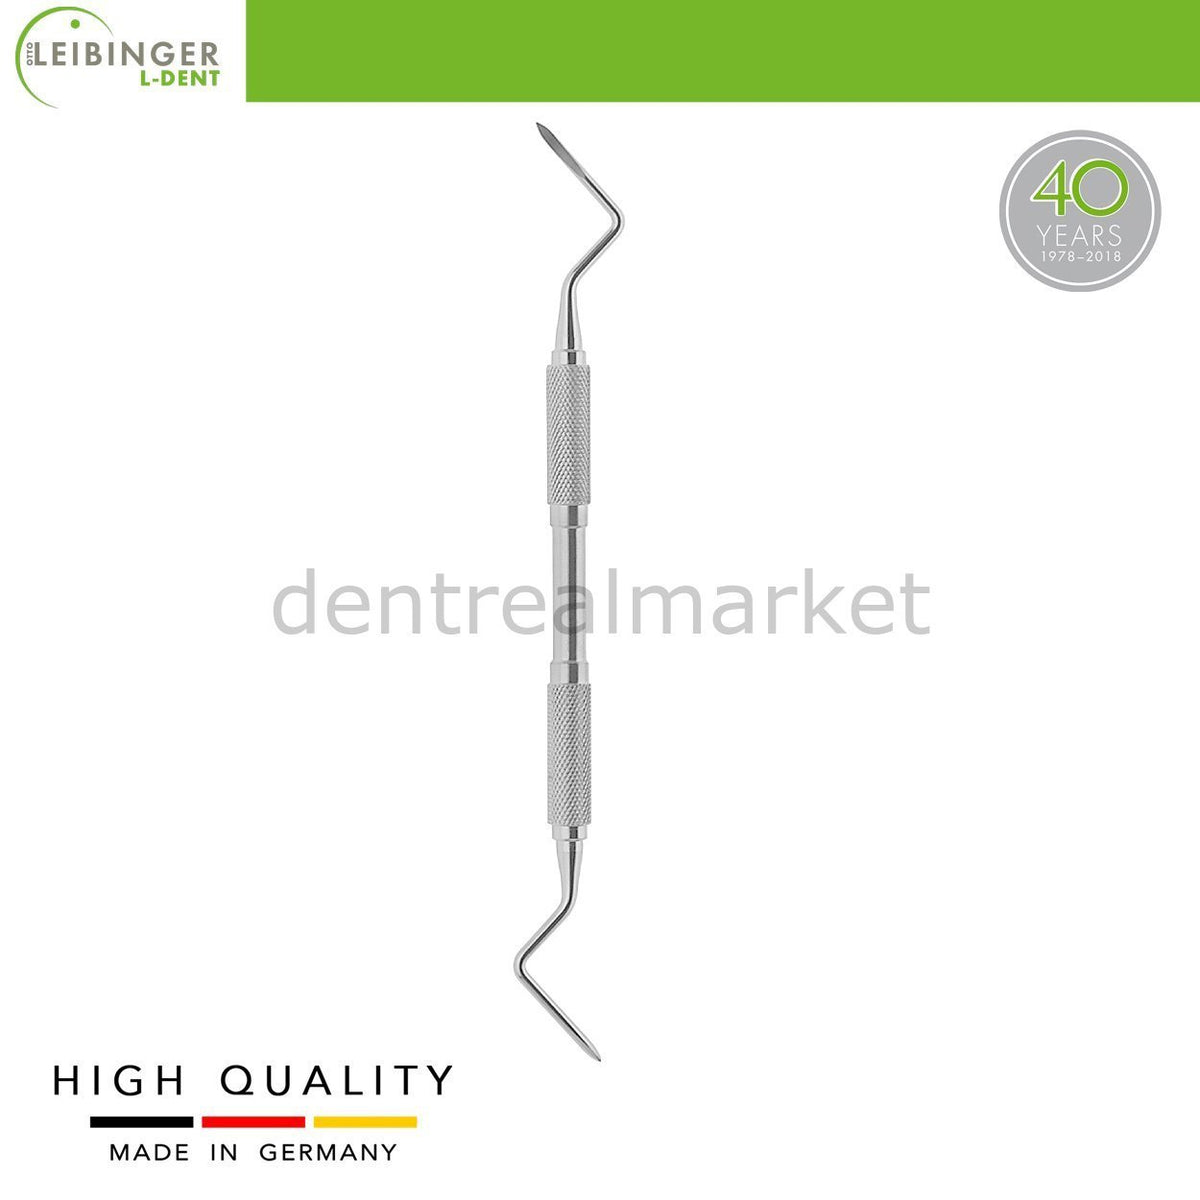 DentrealStore - Leibinger Heidbrink Root Elevator - Fig 2